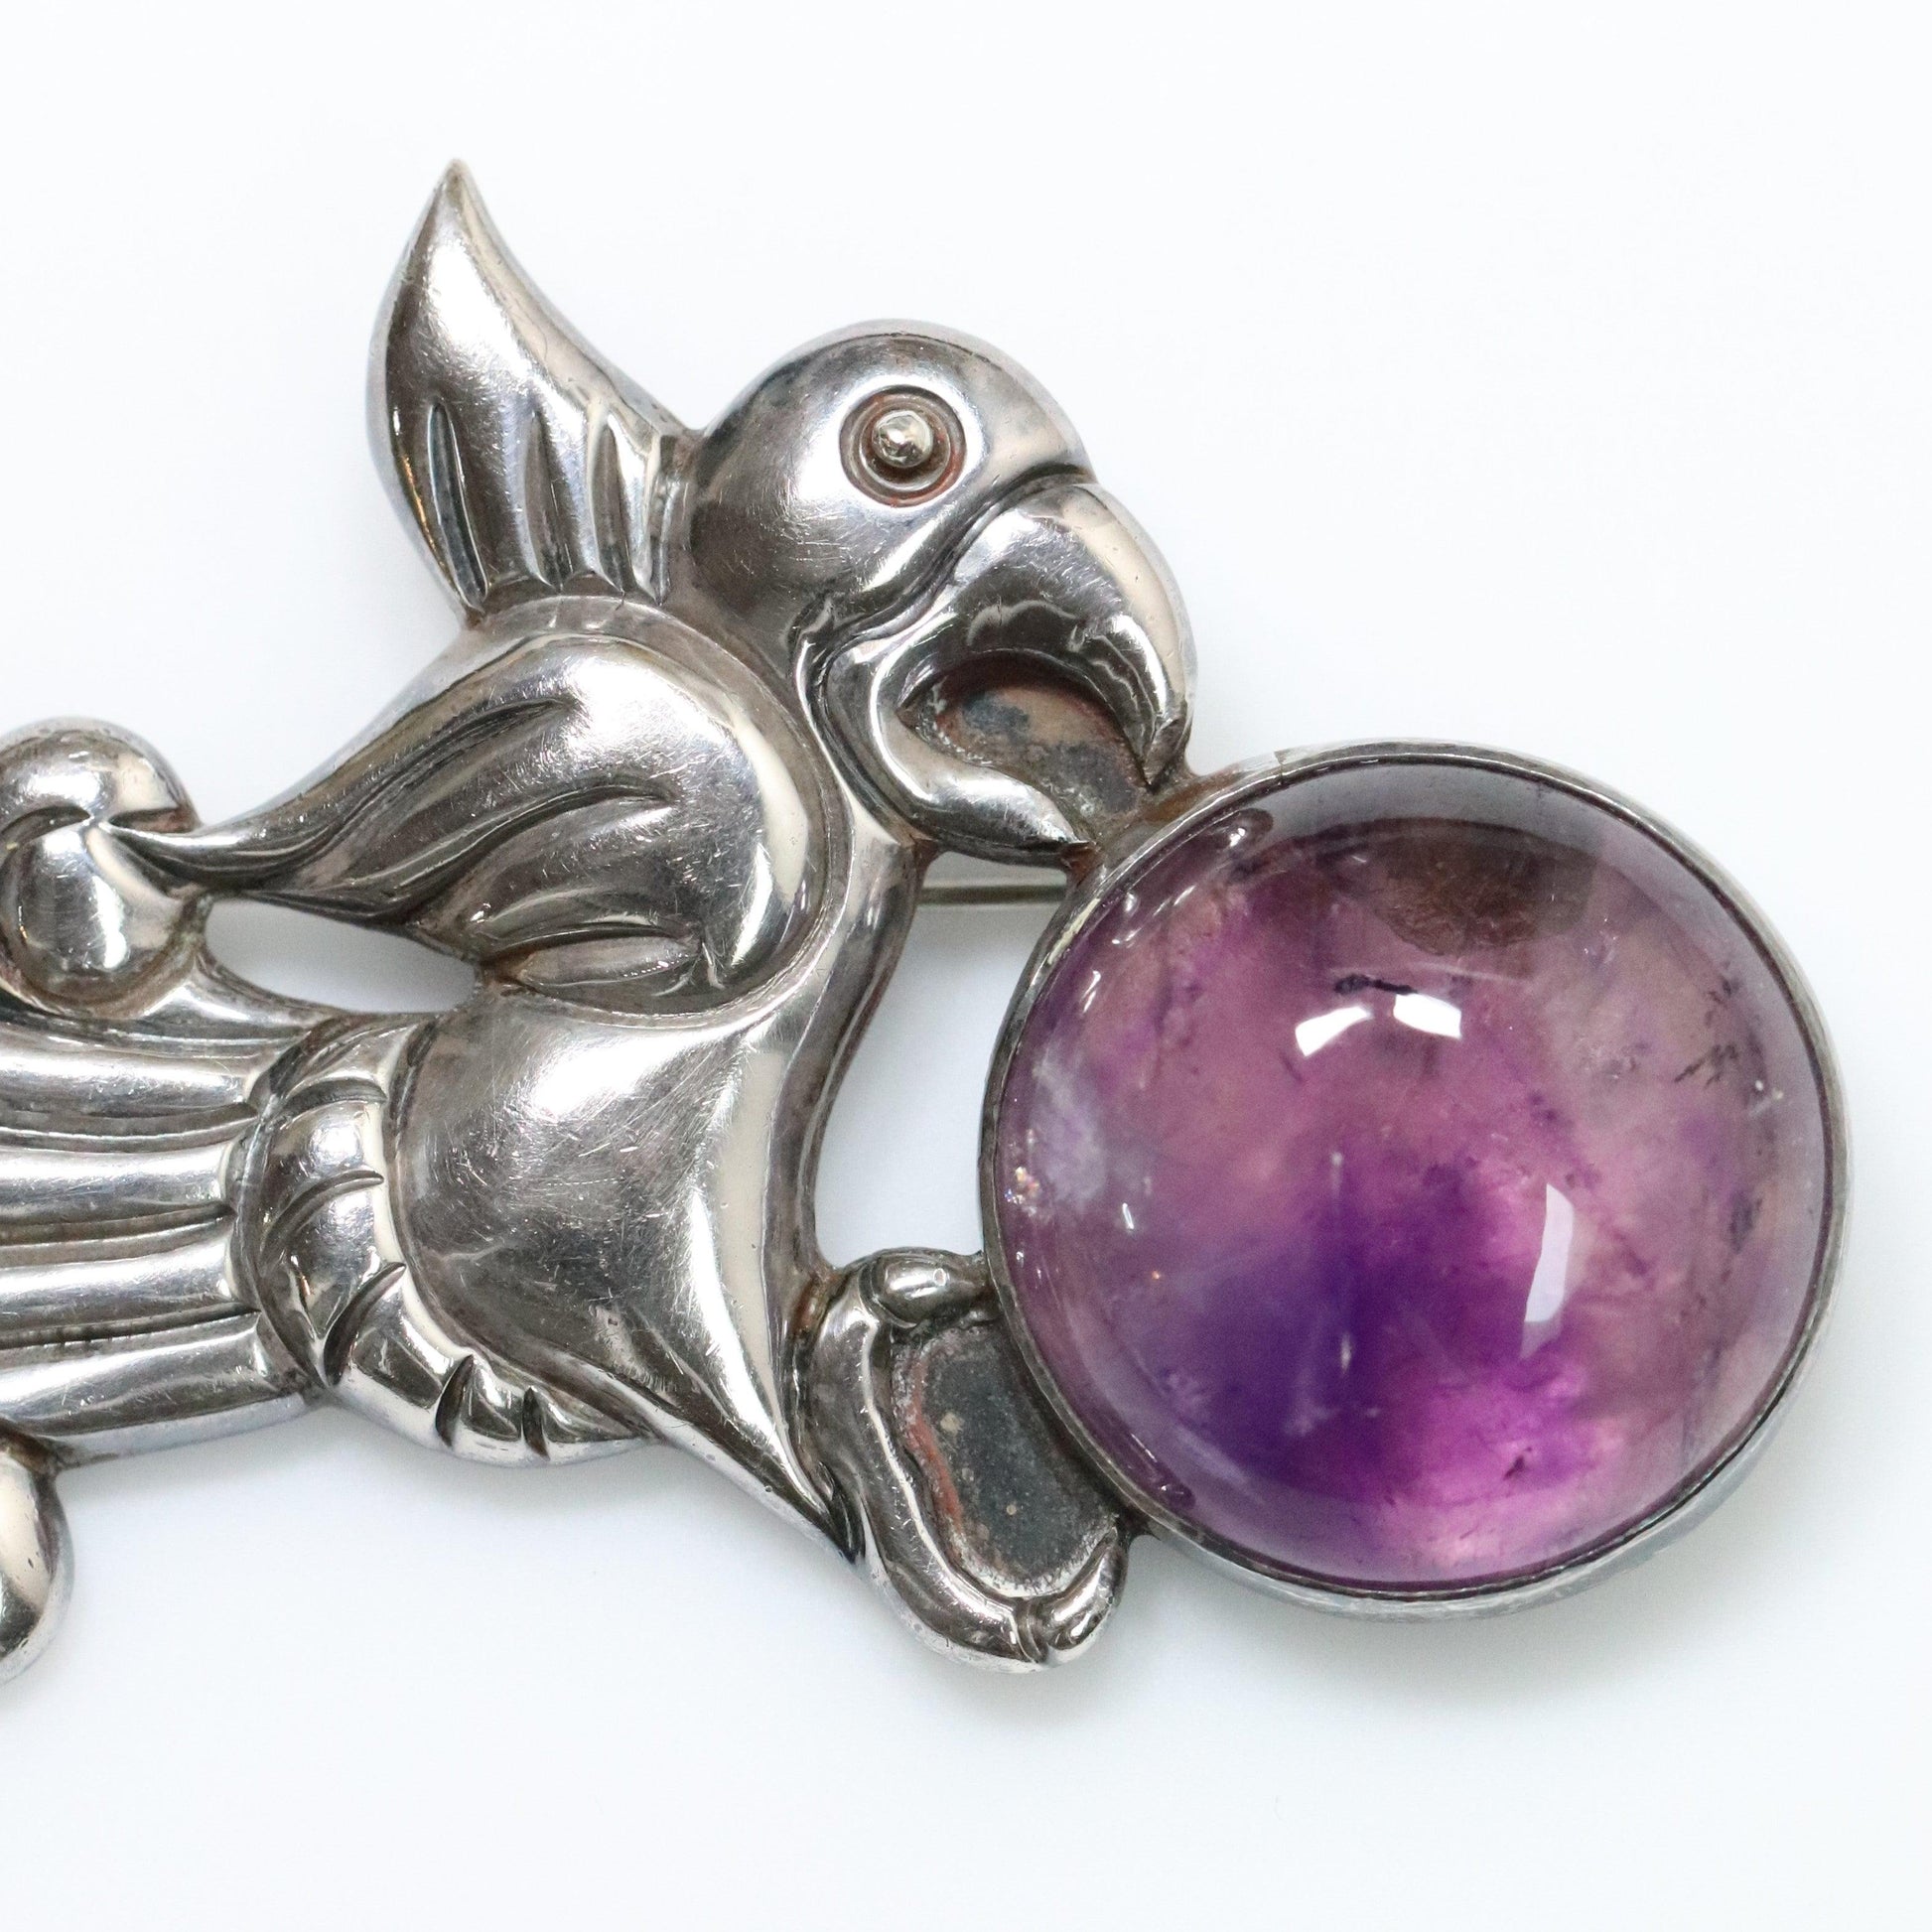 Vintage William Spratling Taxco Silver Mexican Jewelry | Amethyst Parrot Brooch - Carmel Fine Silver Jewelry